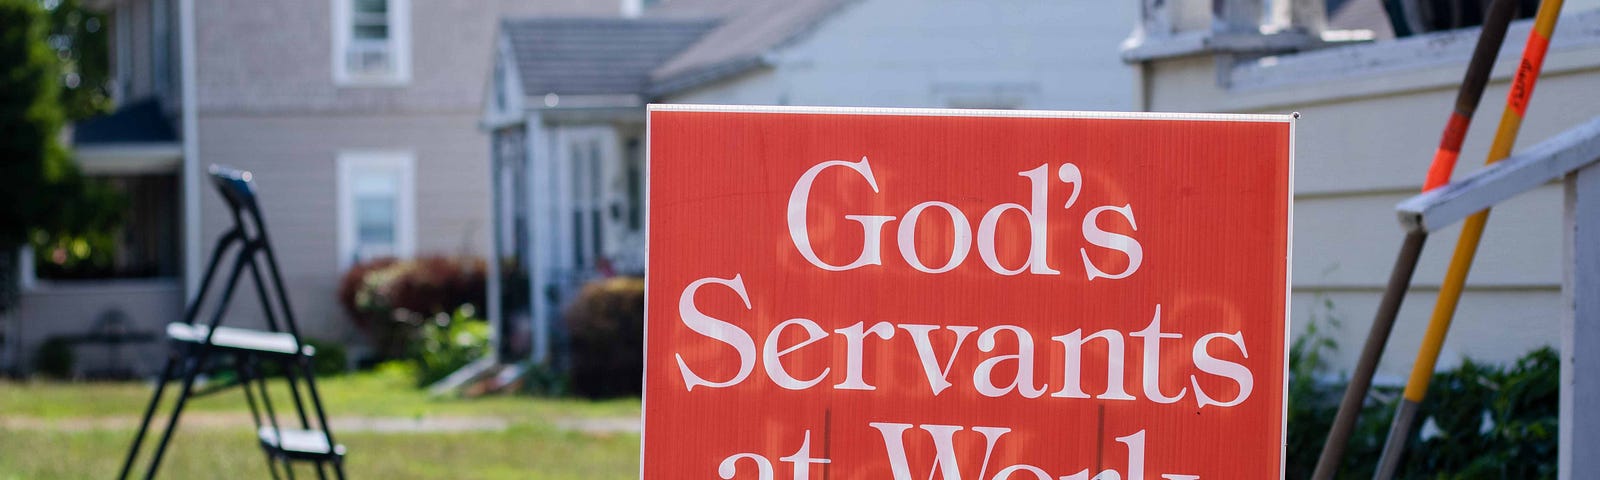 Yard sign of “God’s servants at work.”